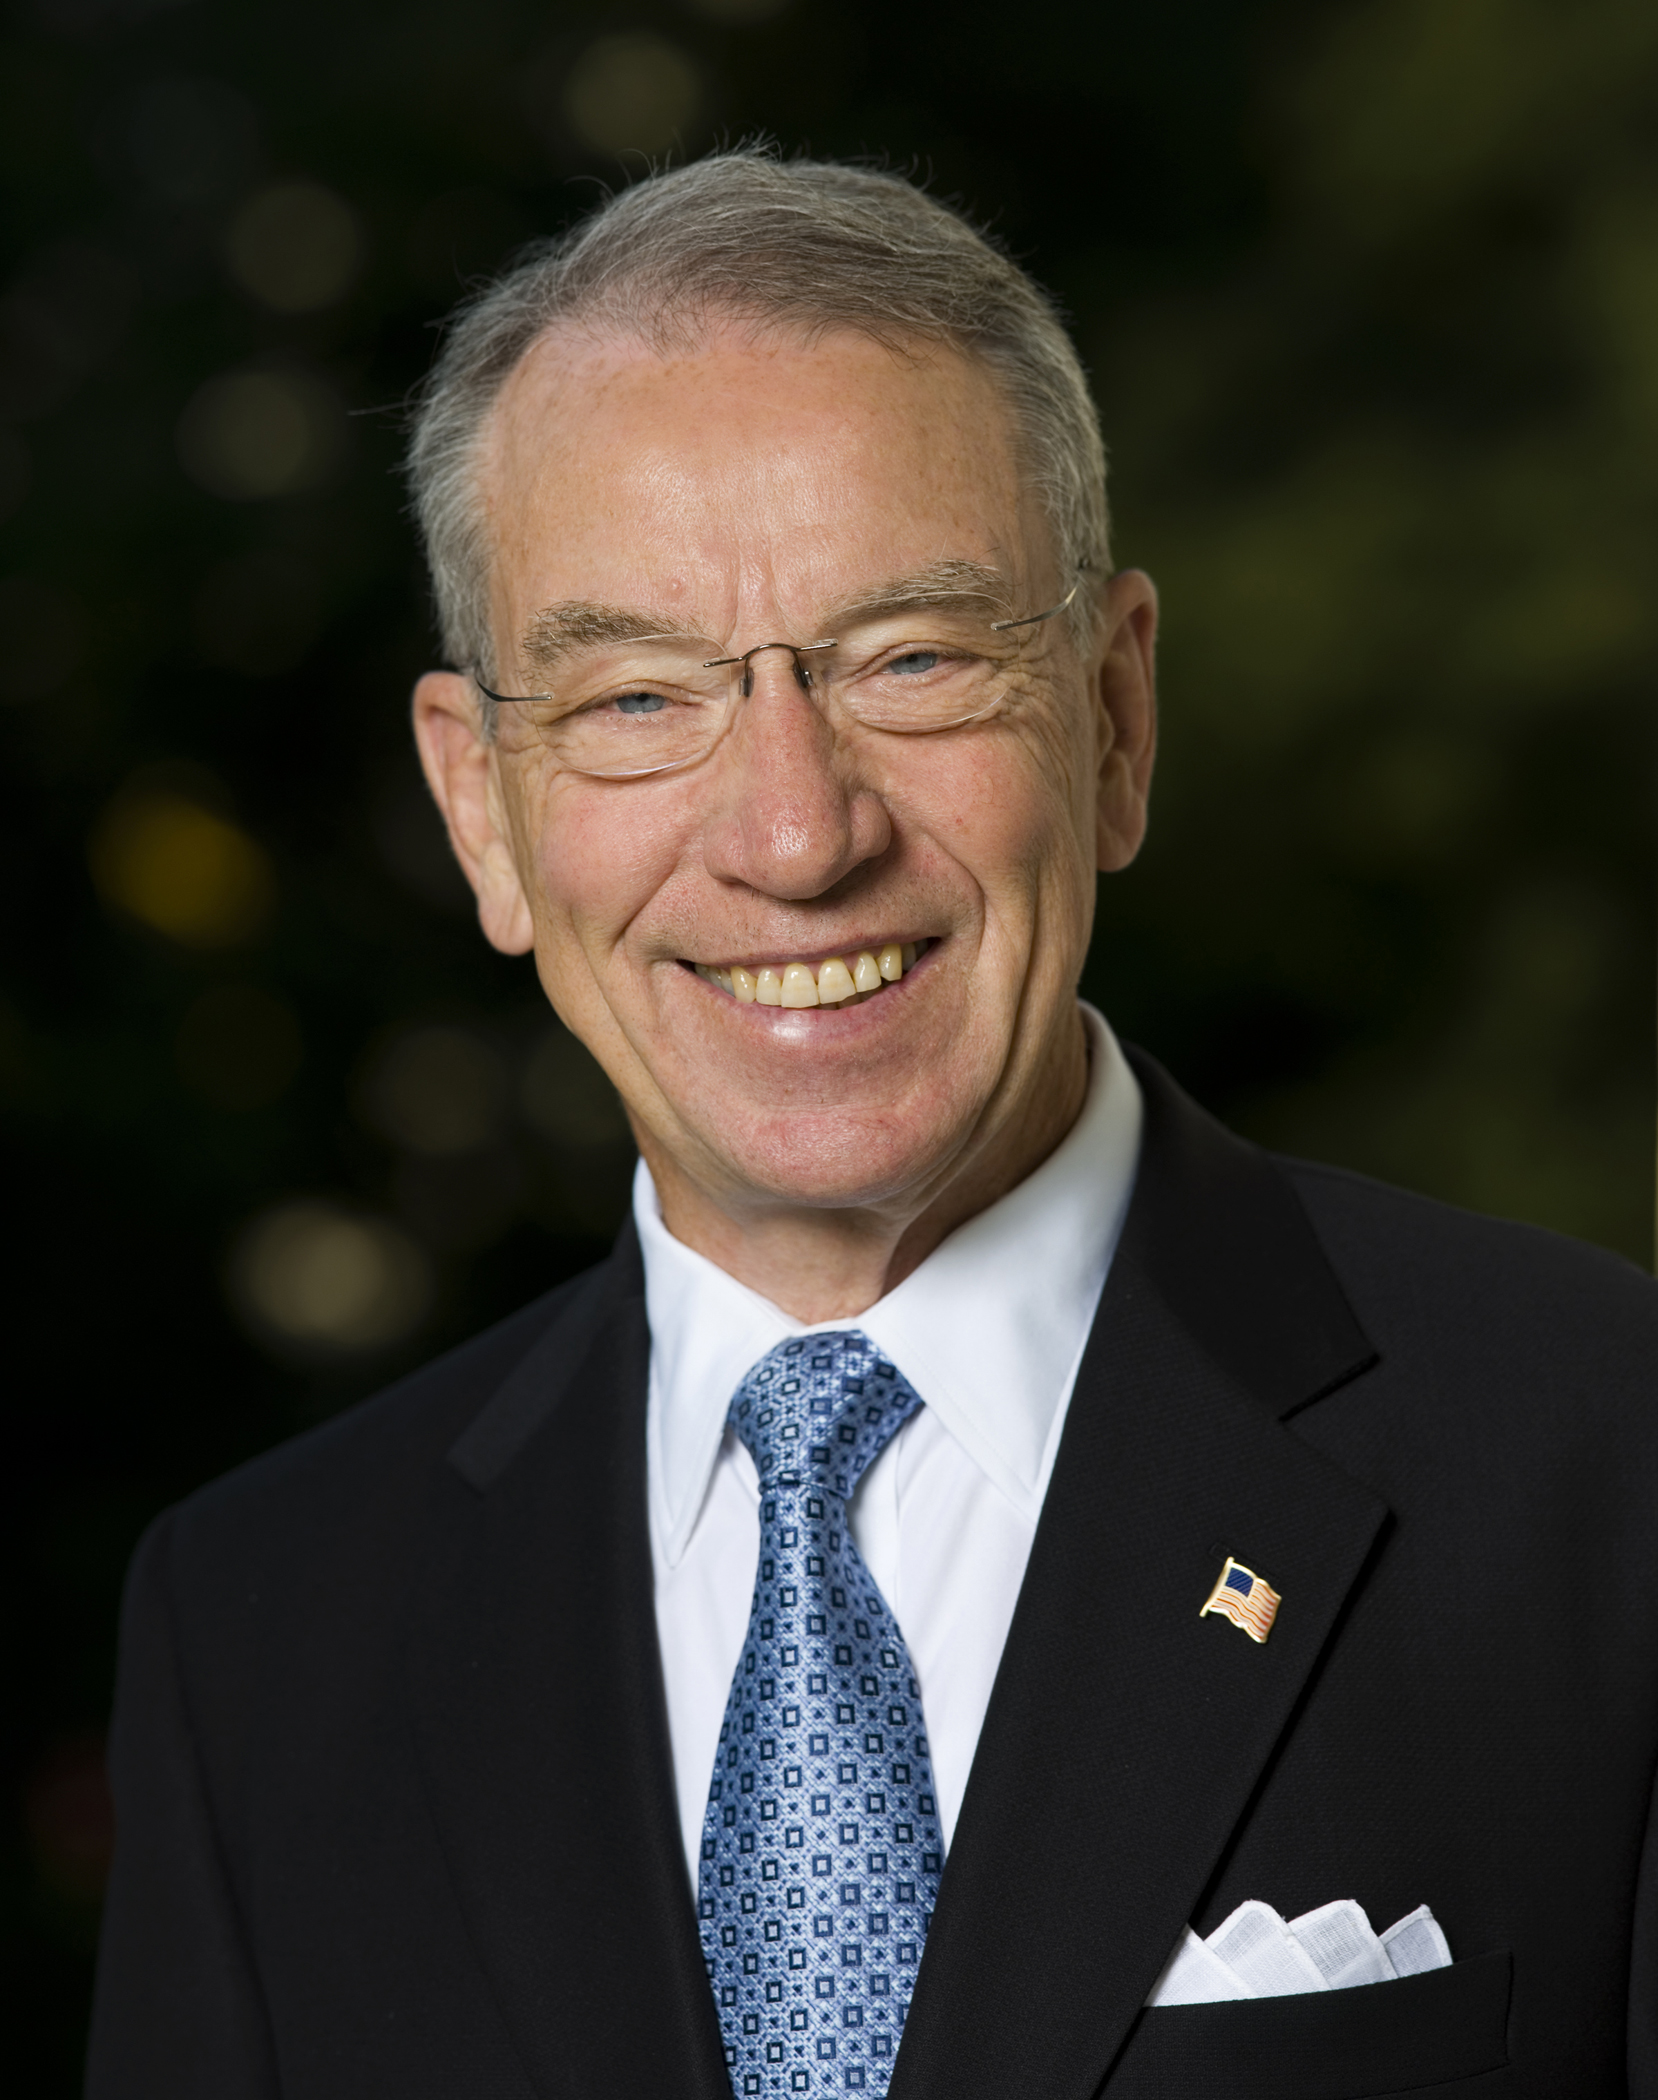 Official Photograph of U.S. Senator Chuck Grassley